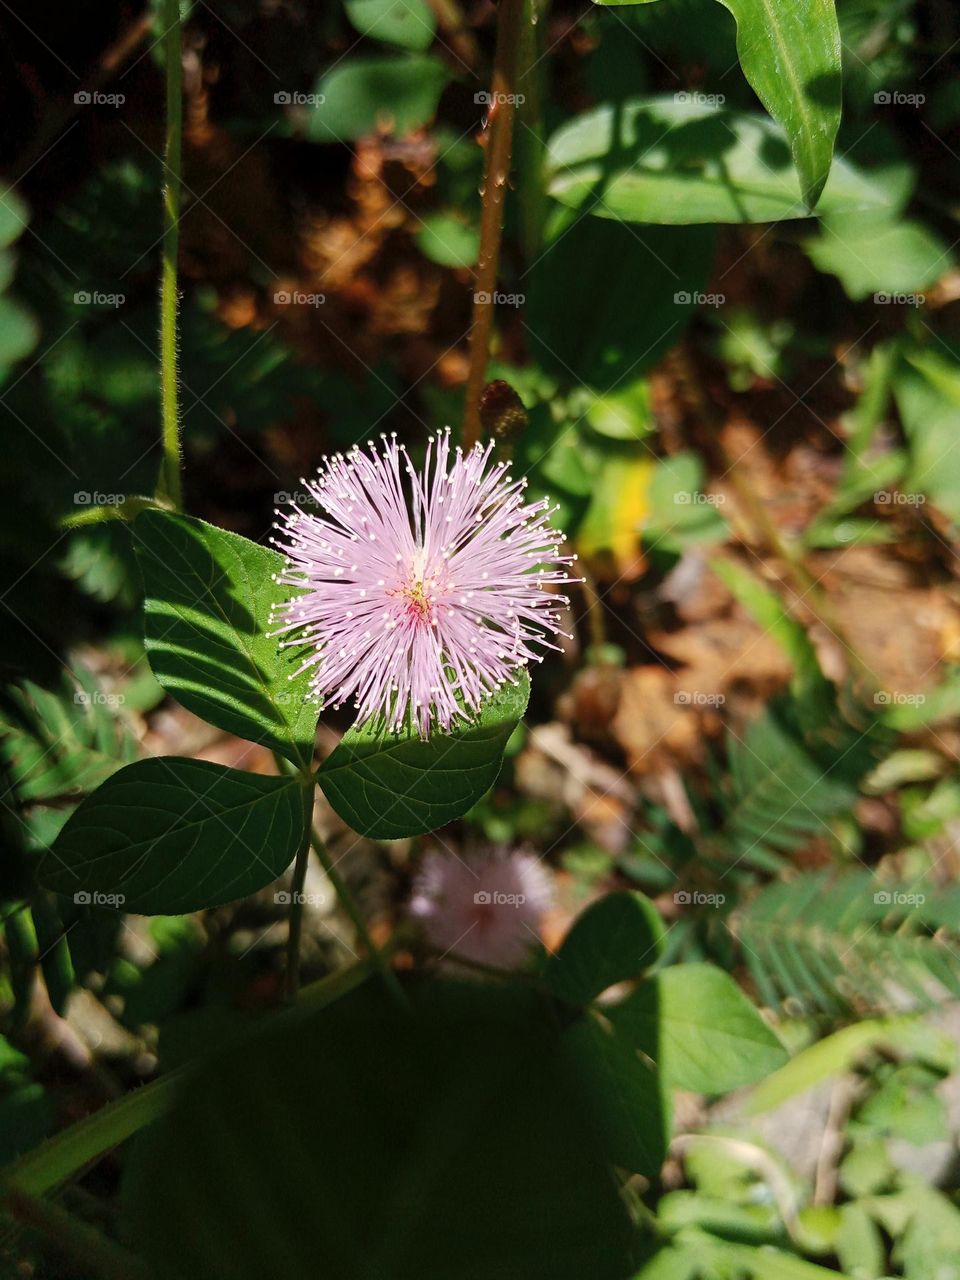 Nidikumba flower